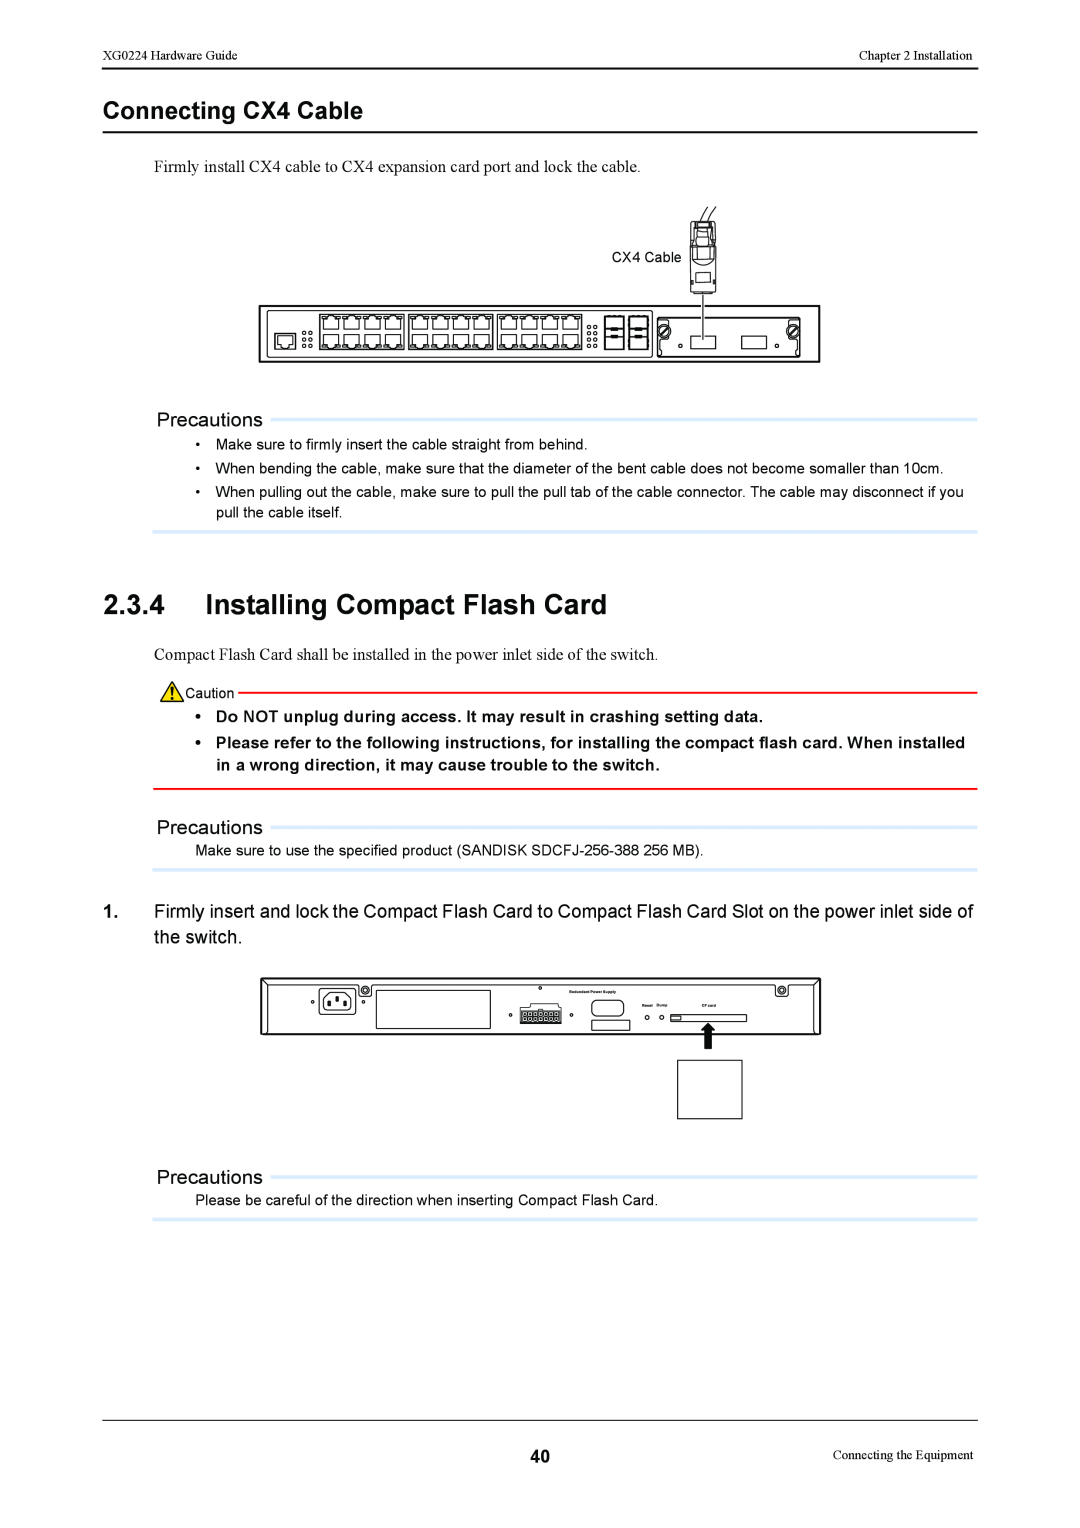 Fujitsu XG0224 manual Installing Compact Flash Card, Connecting CX4 Cable 